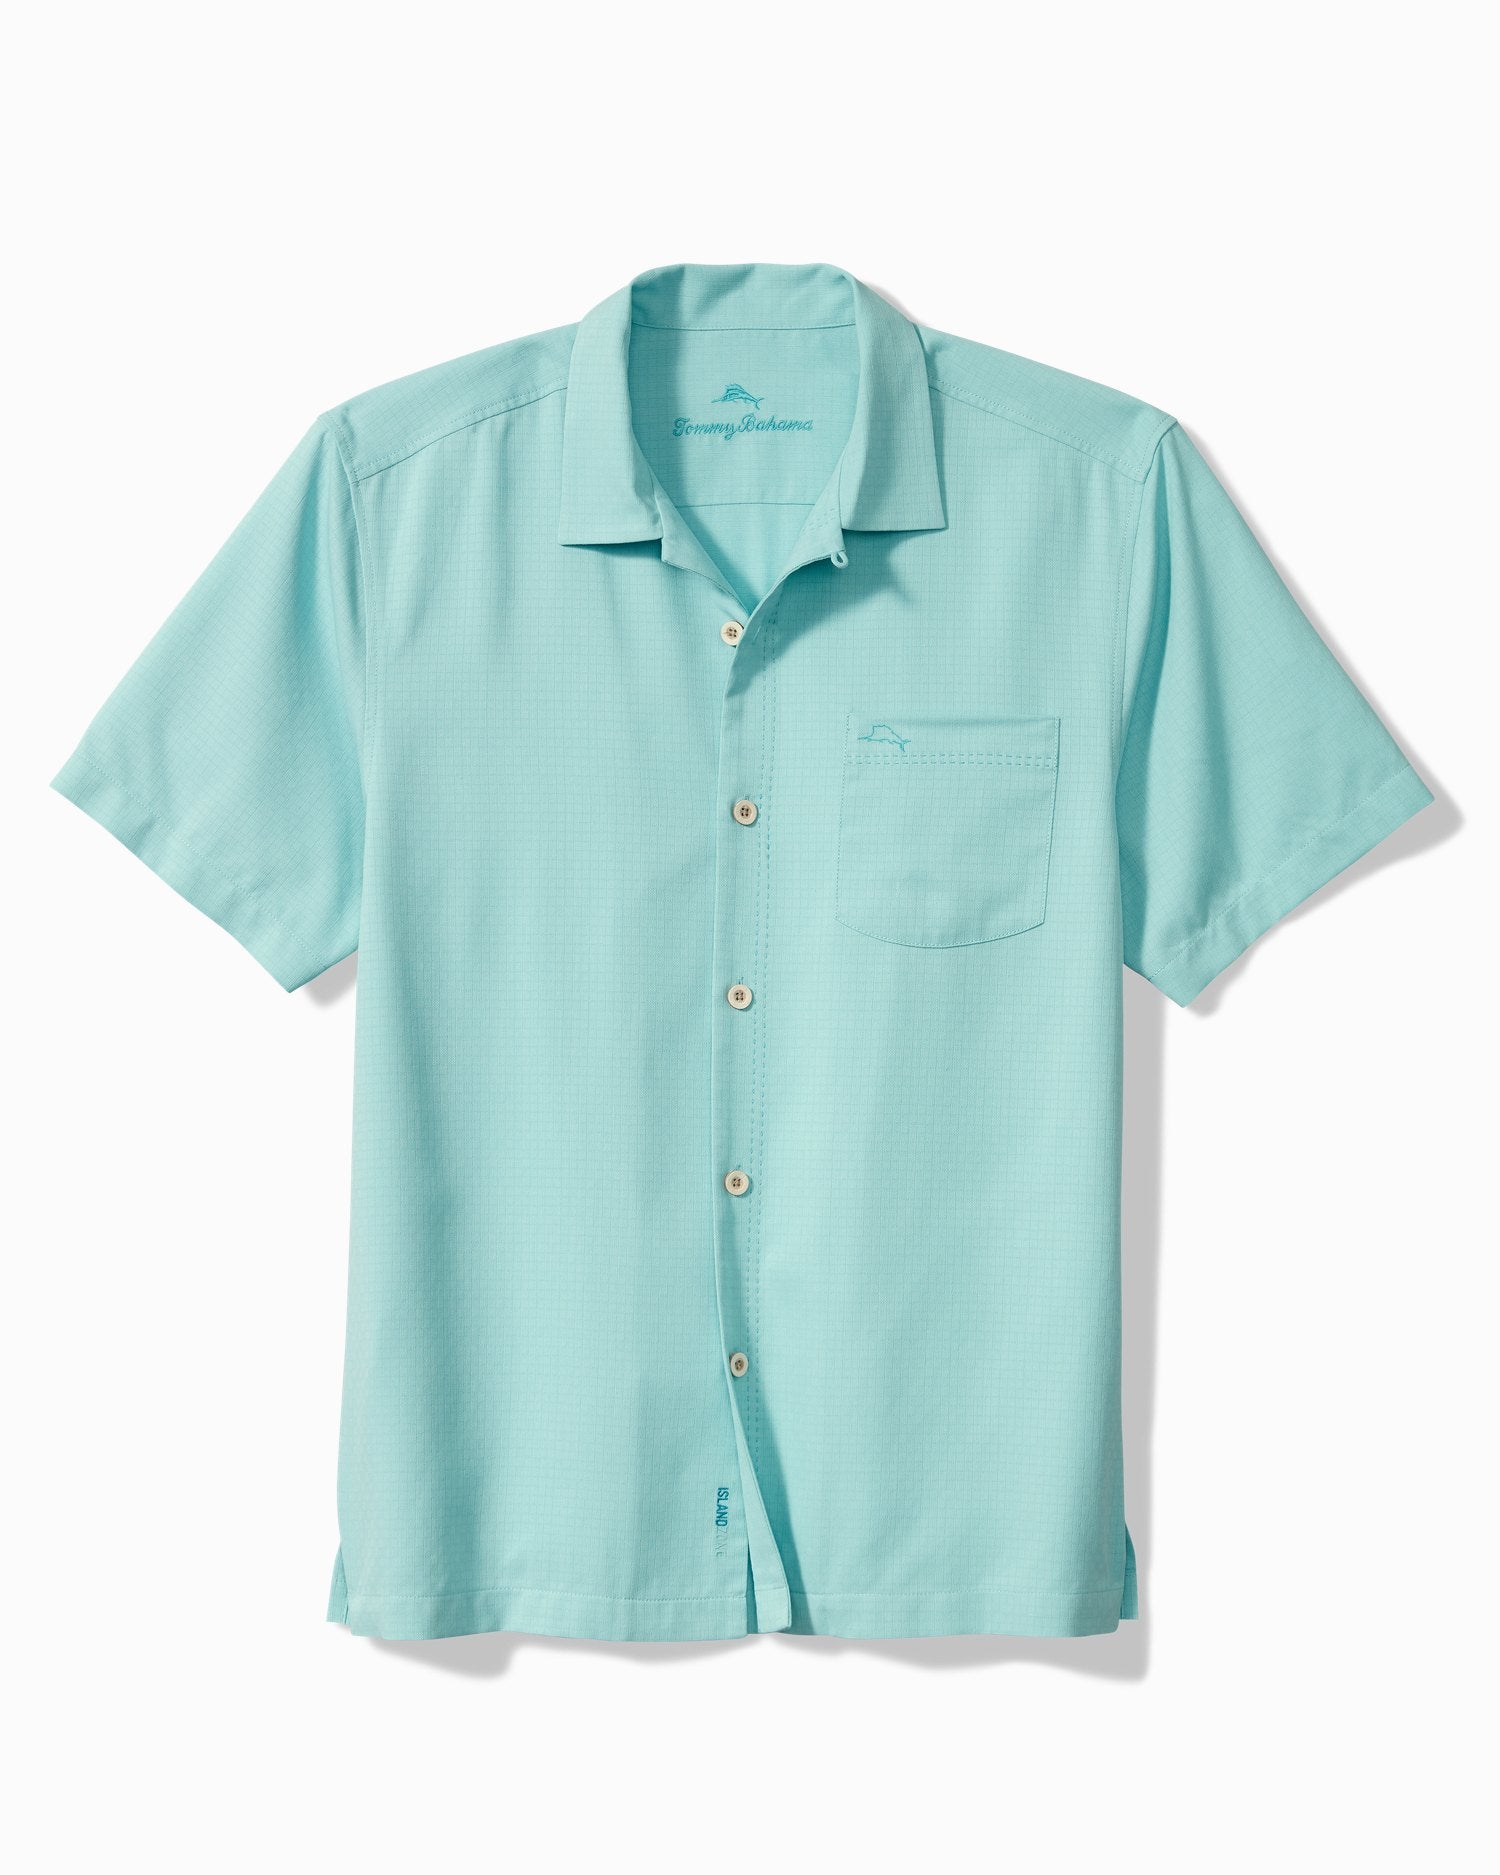 Tommy Bahama Coastal Breeze Check Camp Shirt Hummingbird Blue M  023791016876